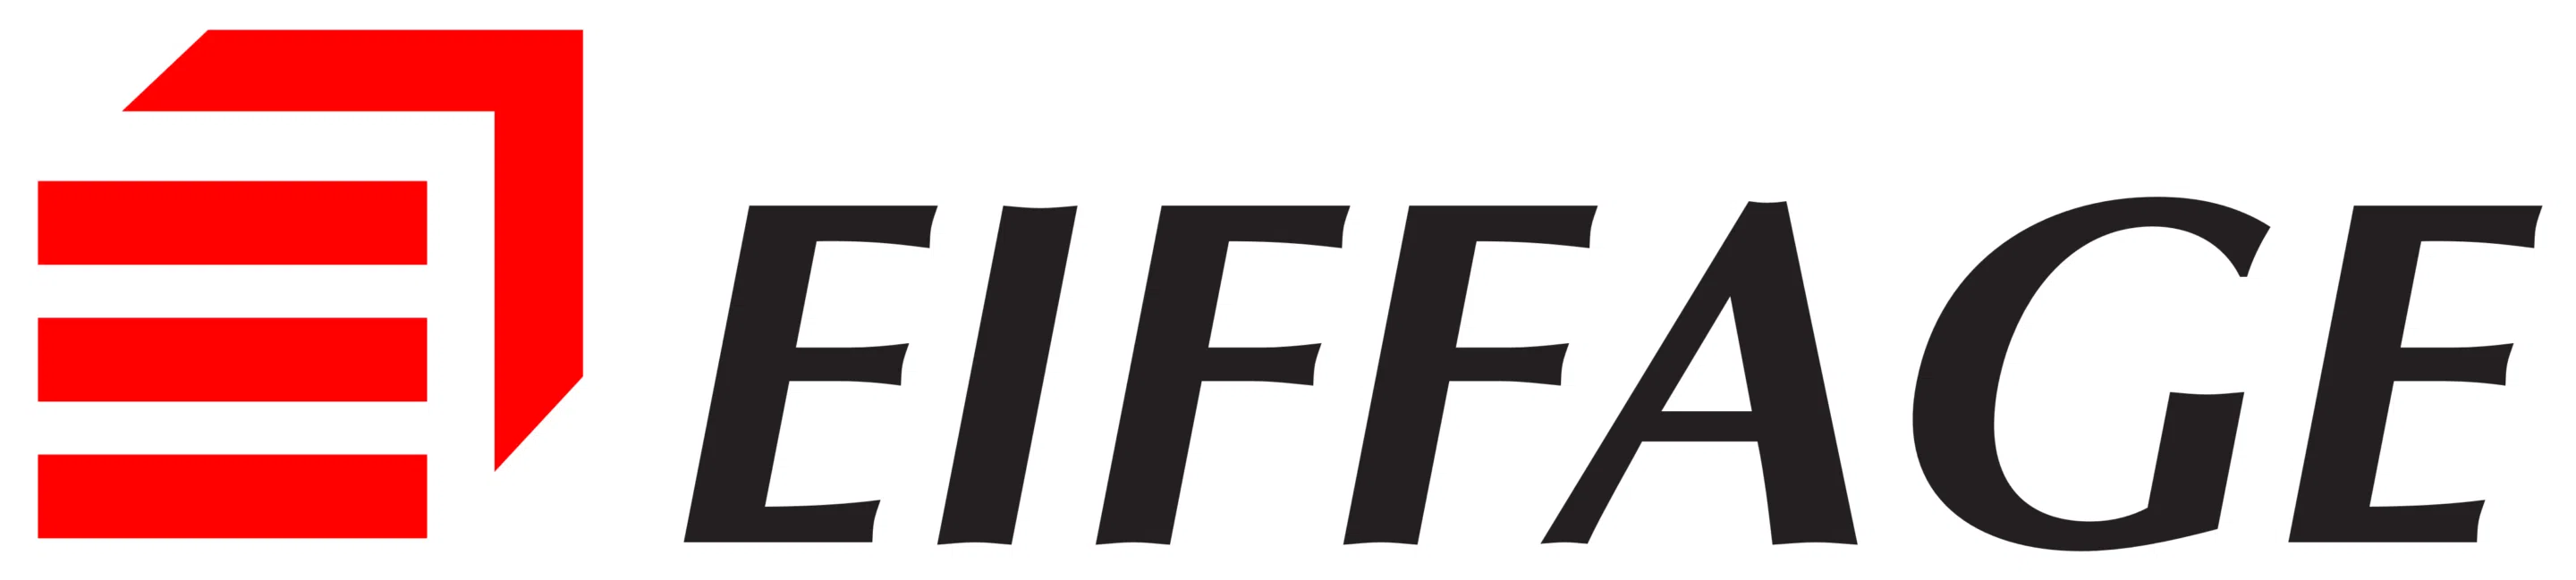 Eiffage logo 1 - meilleures applications